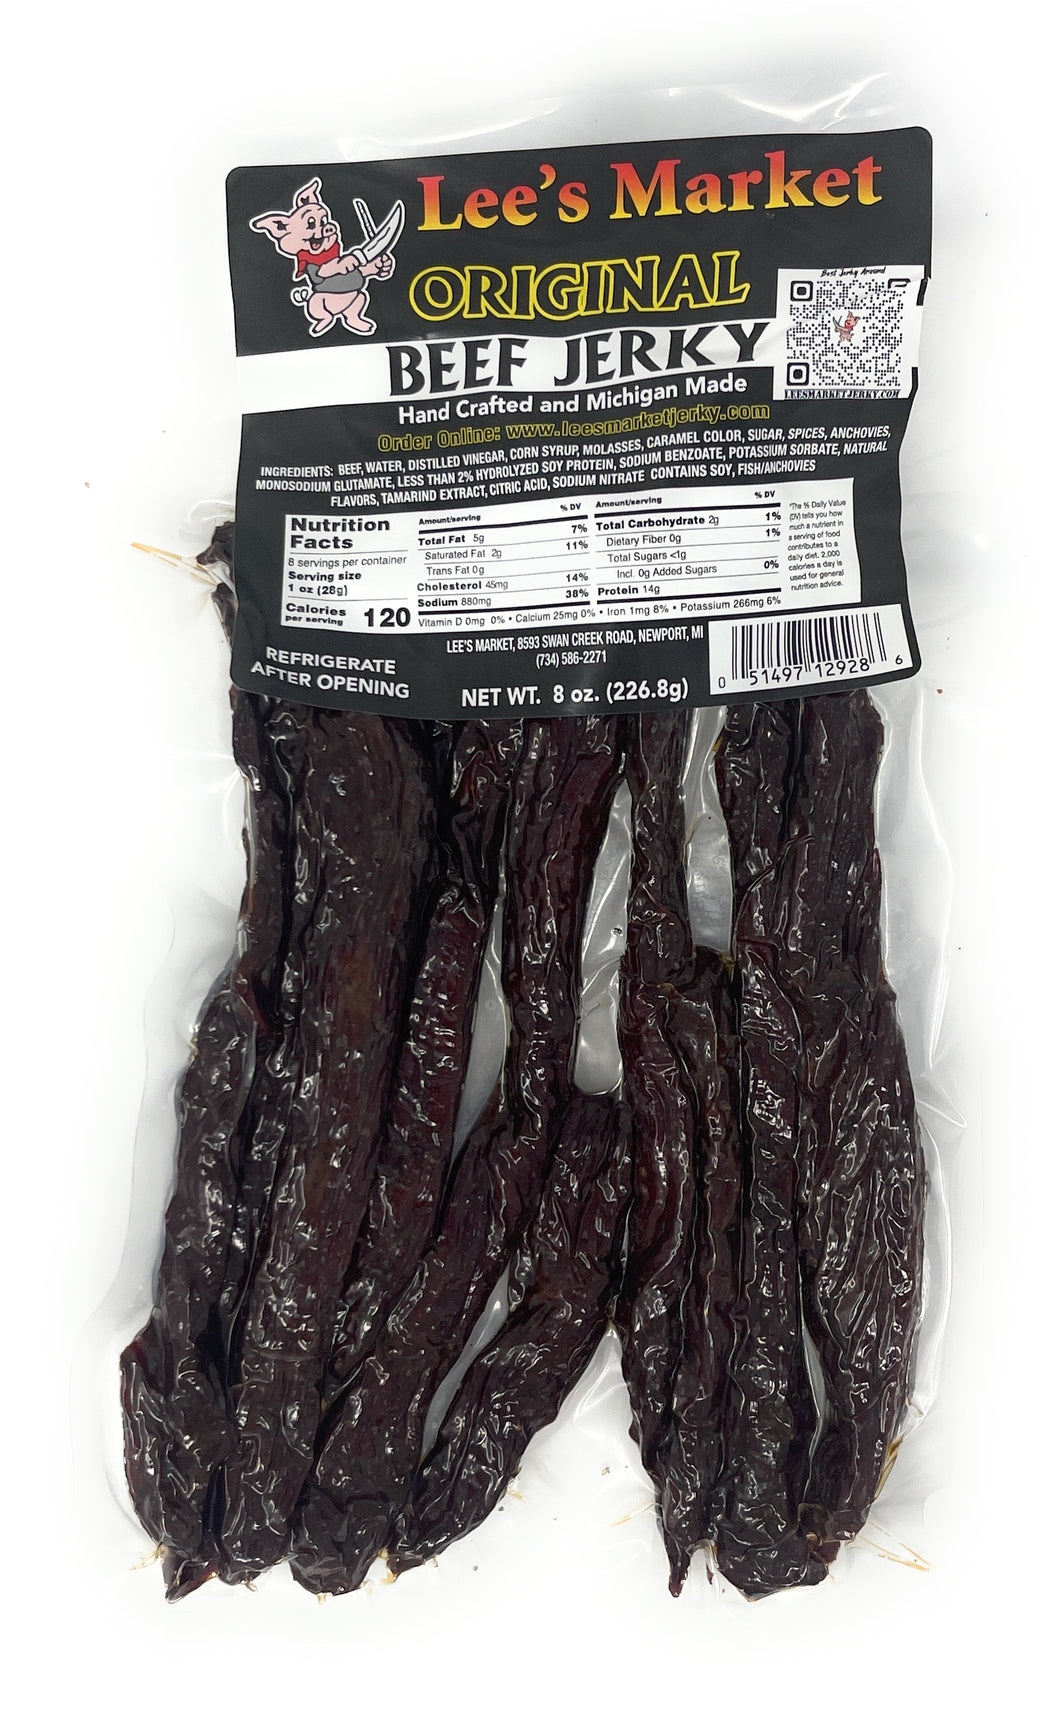 Package of Original Beef Jerky